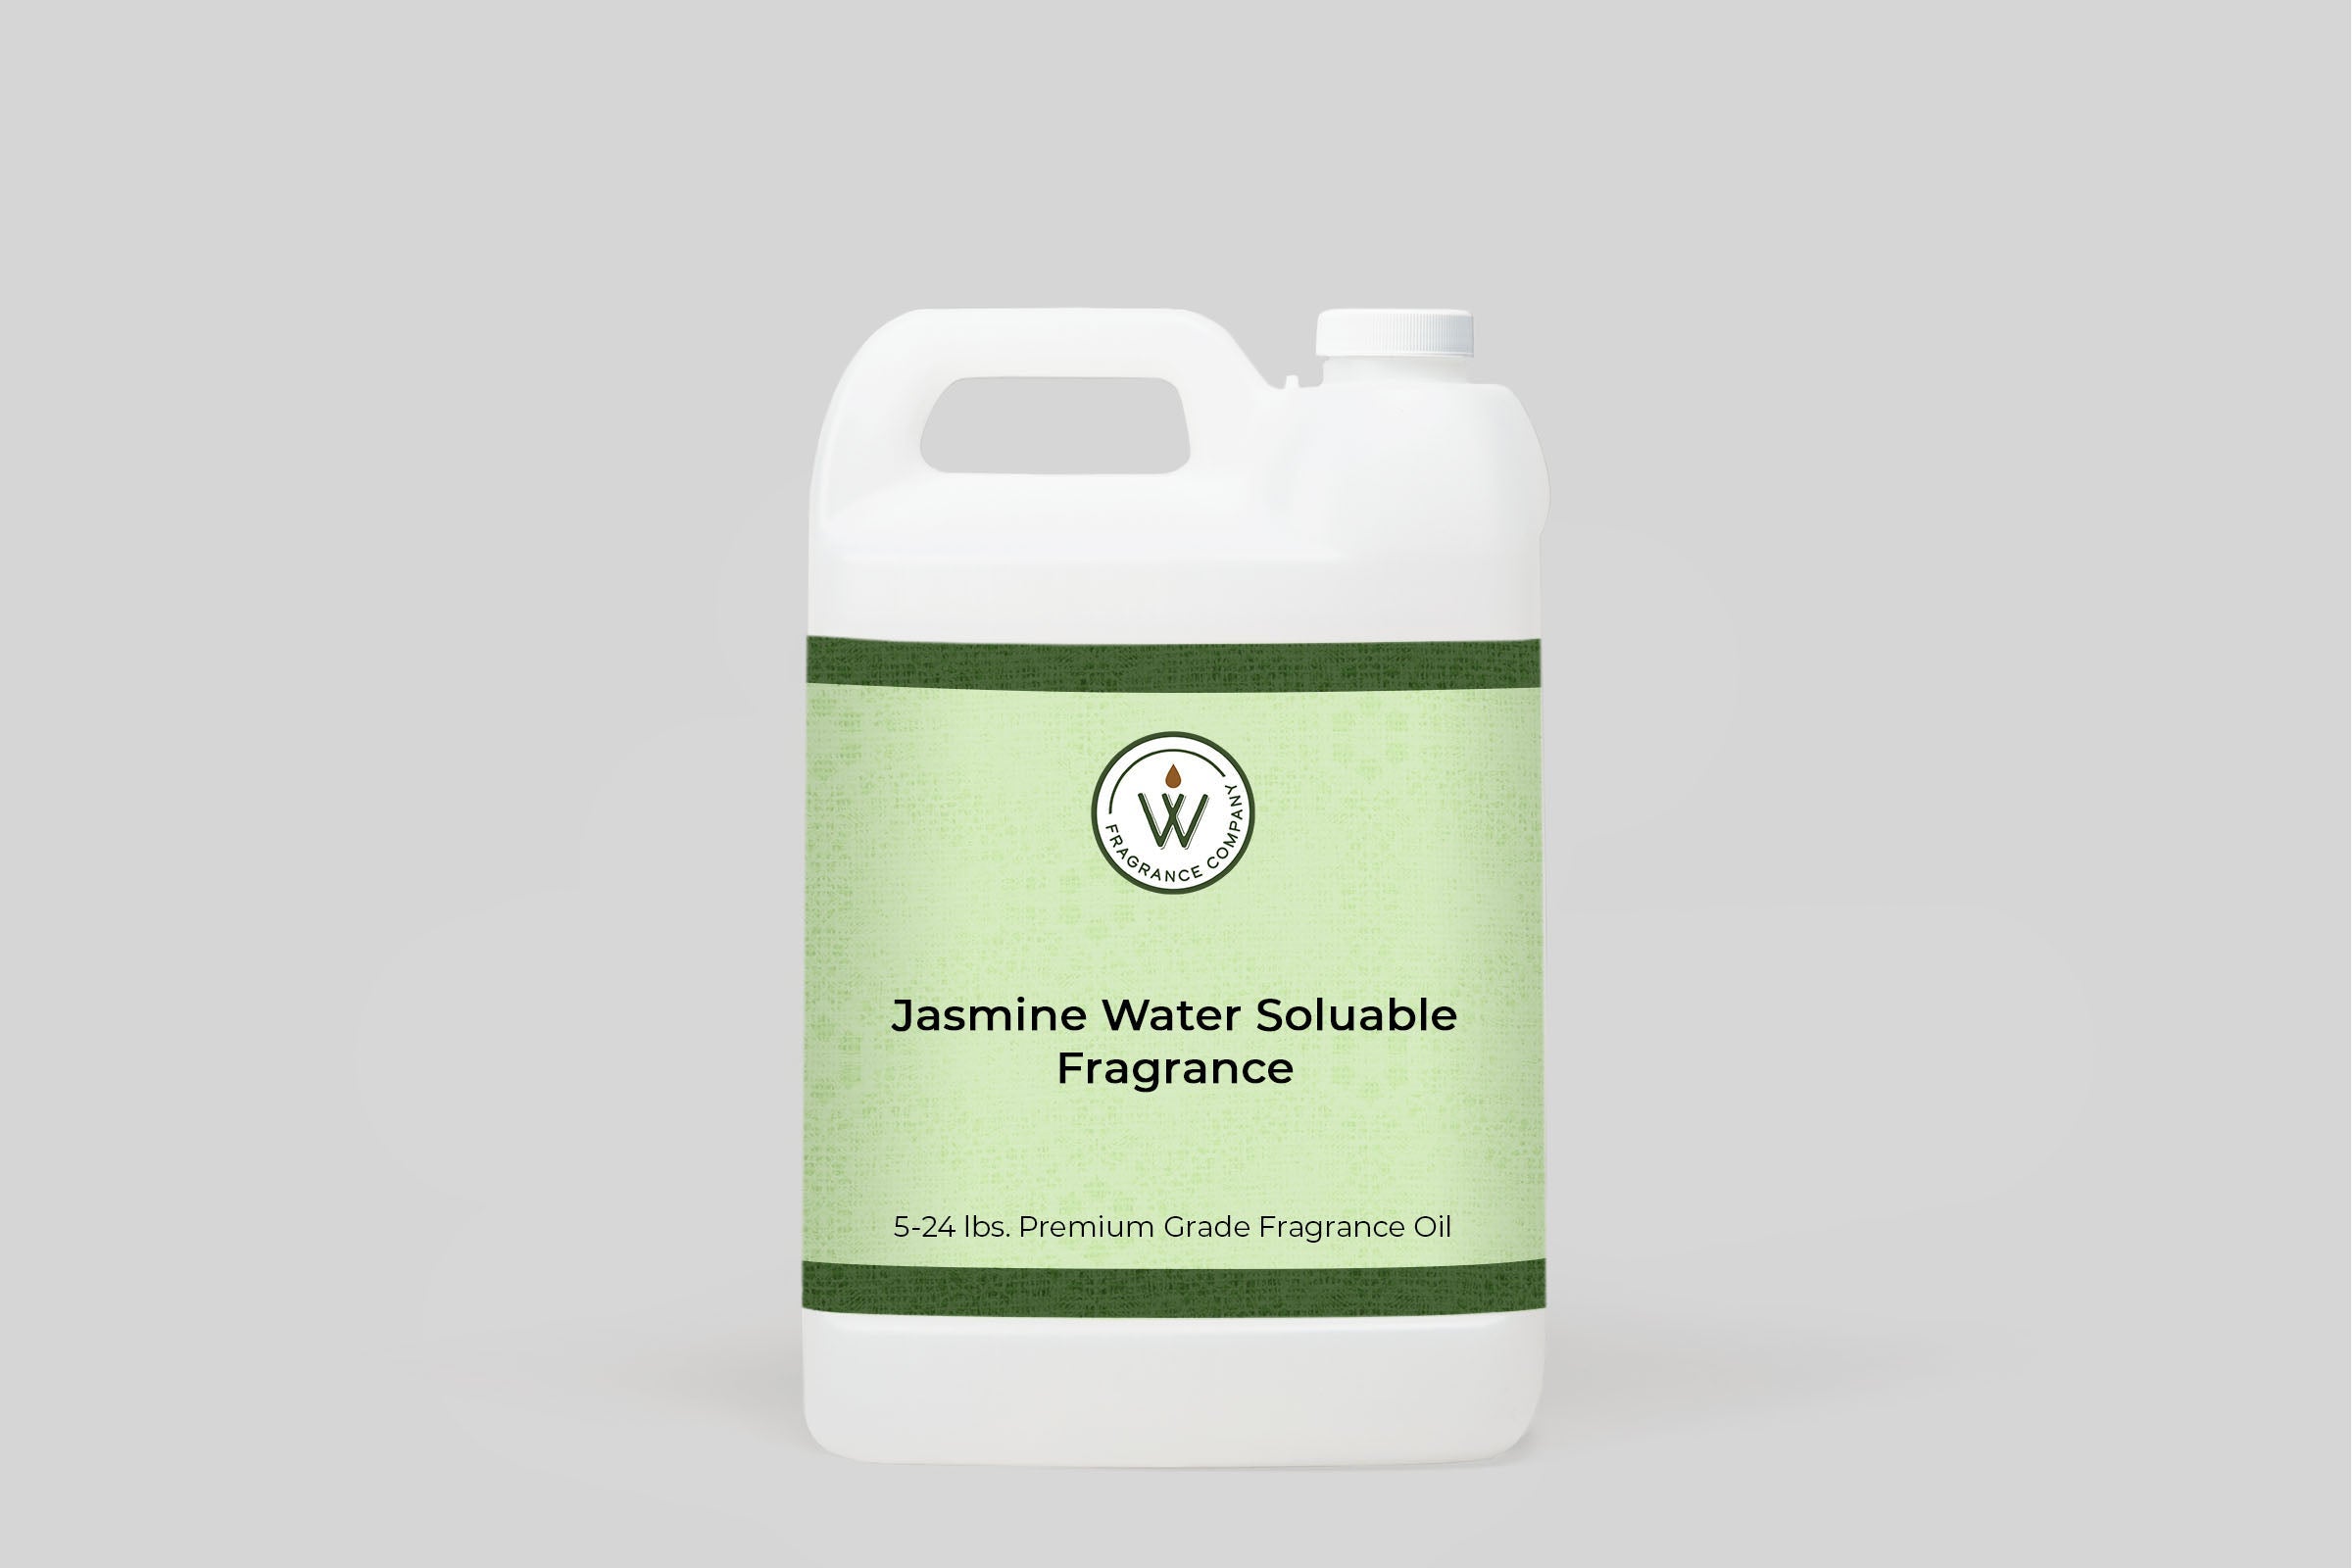 Jasmine Water Soluble Fragrance